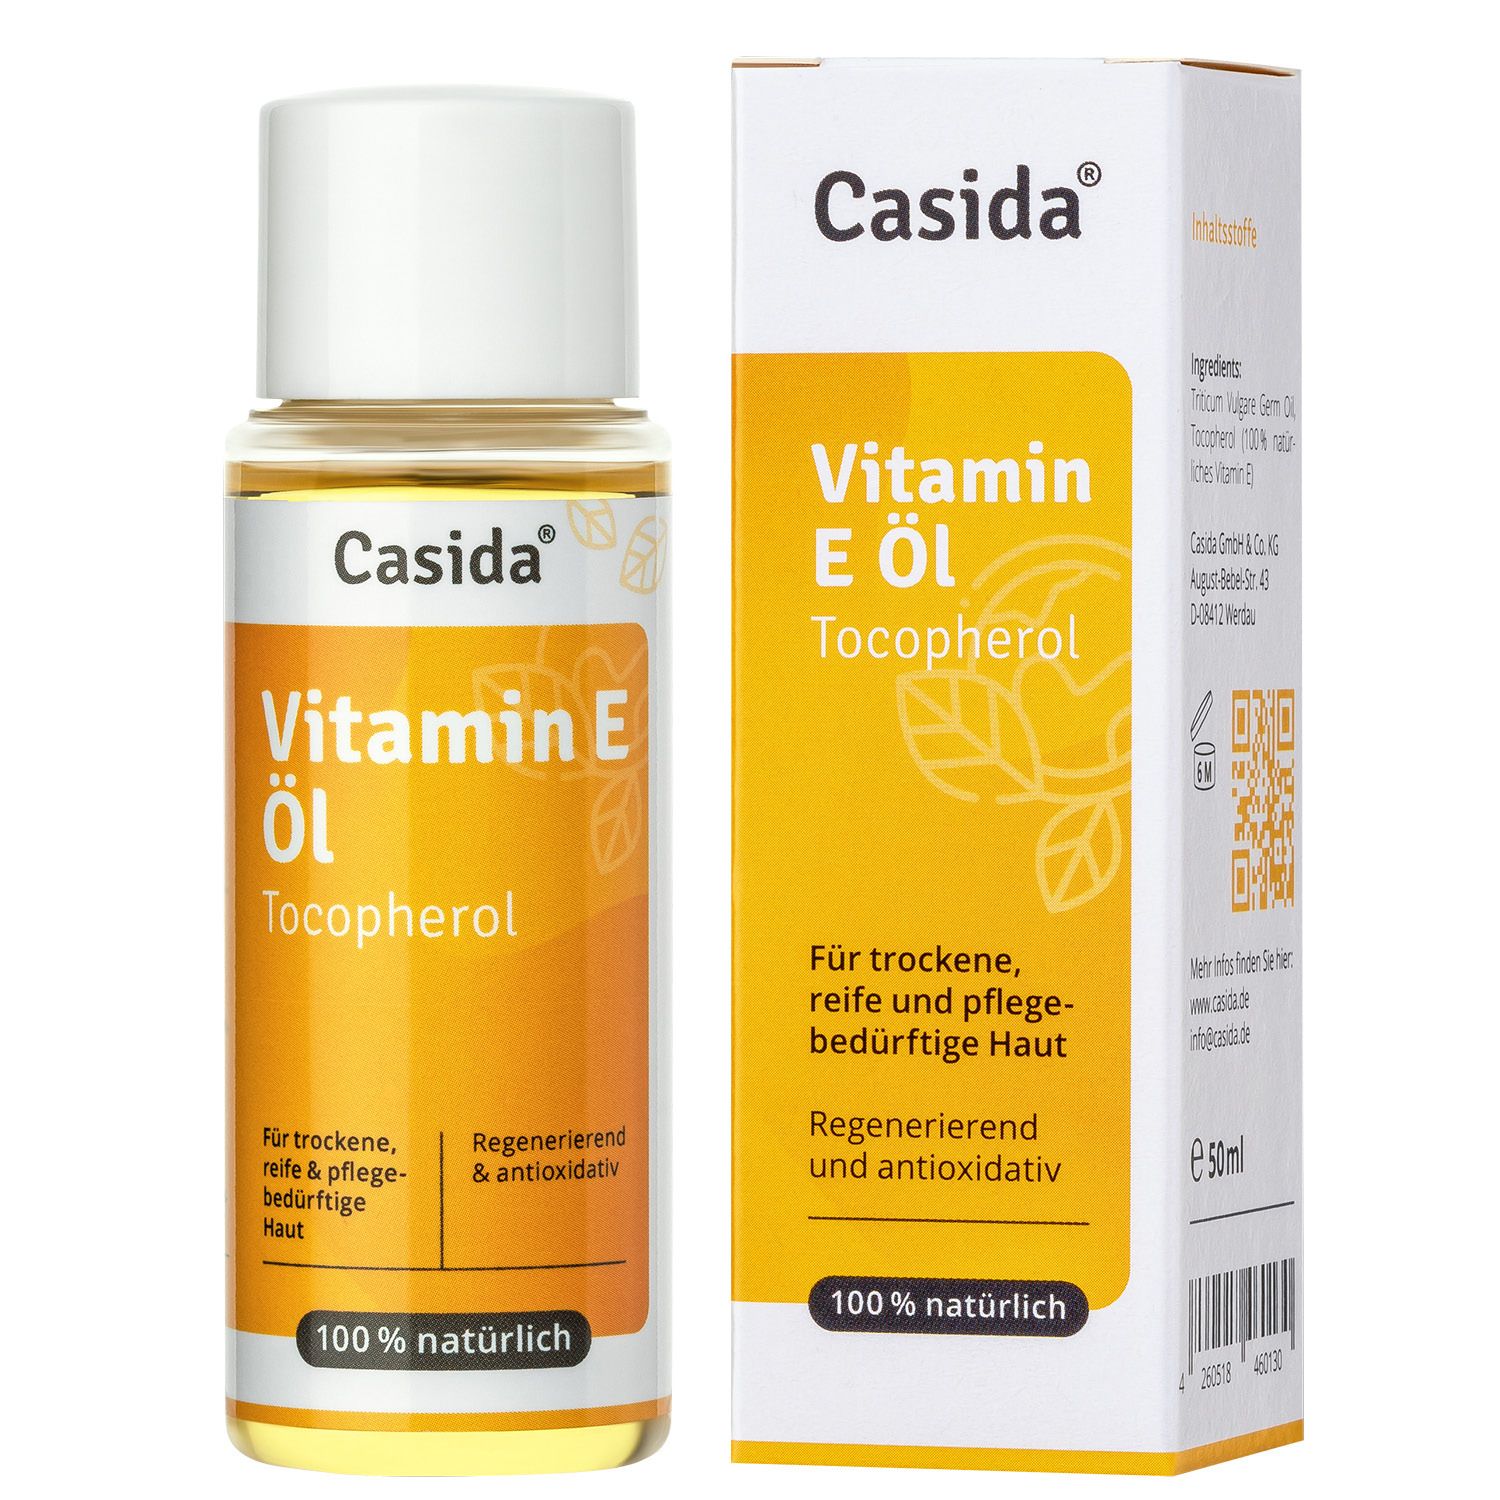 Image of Casida Vitamin E Öl Tocopherol